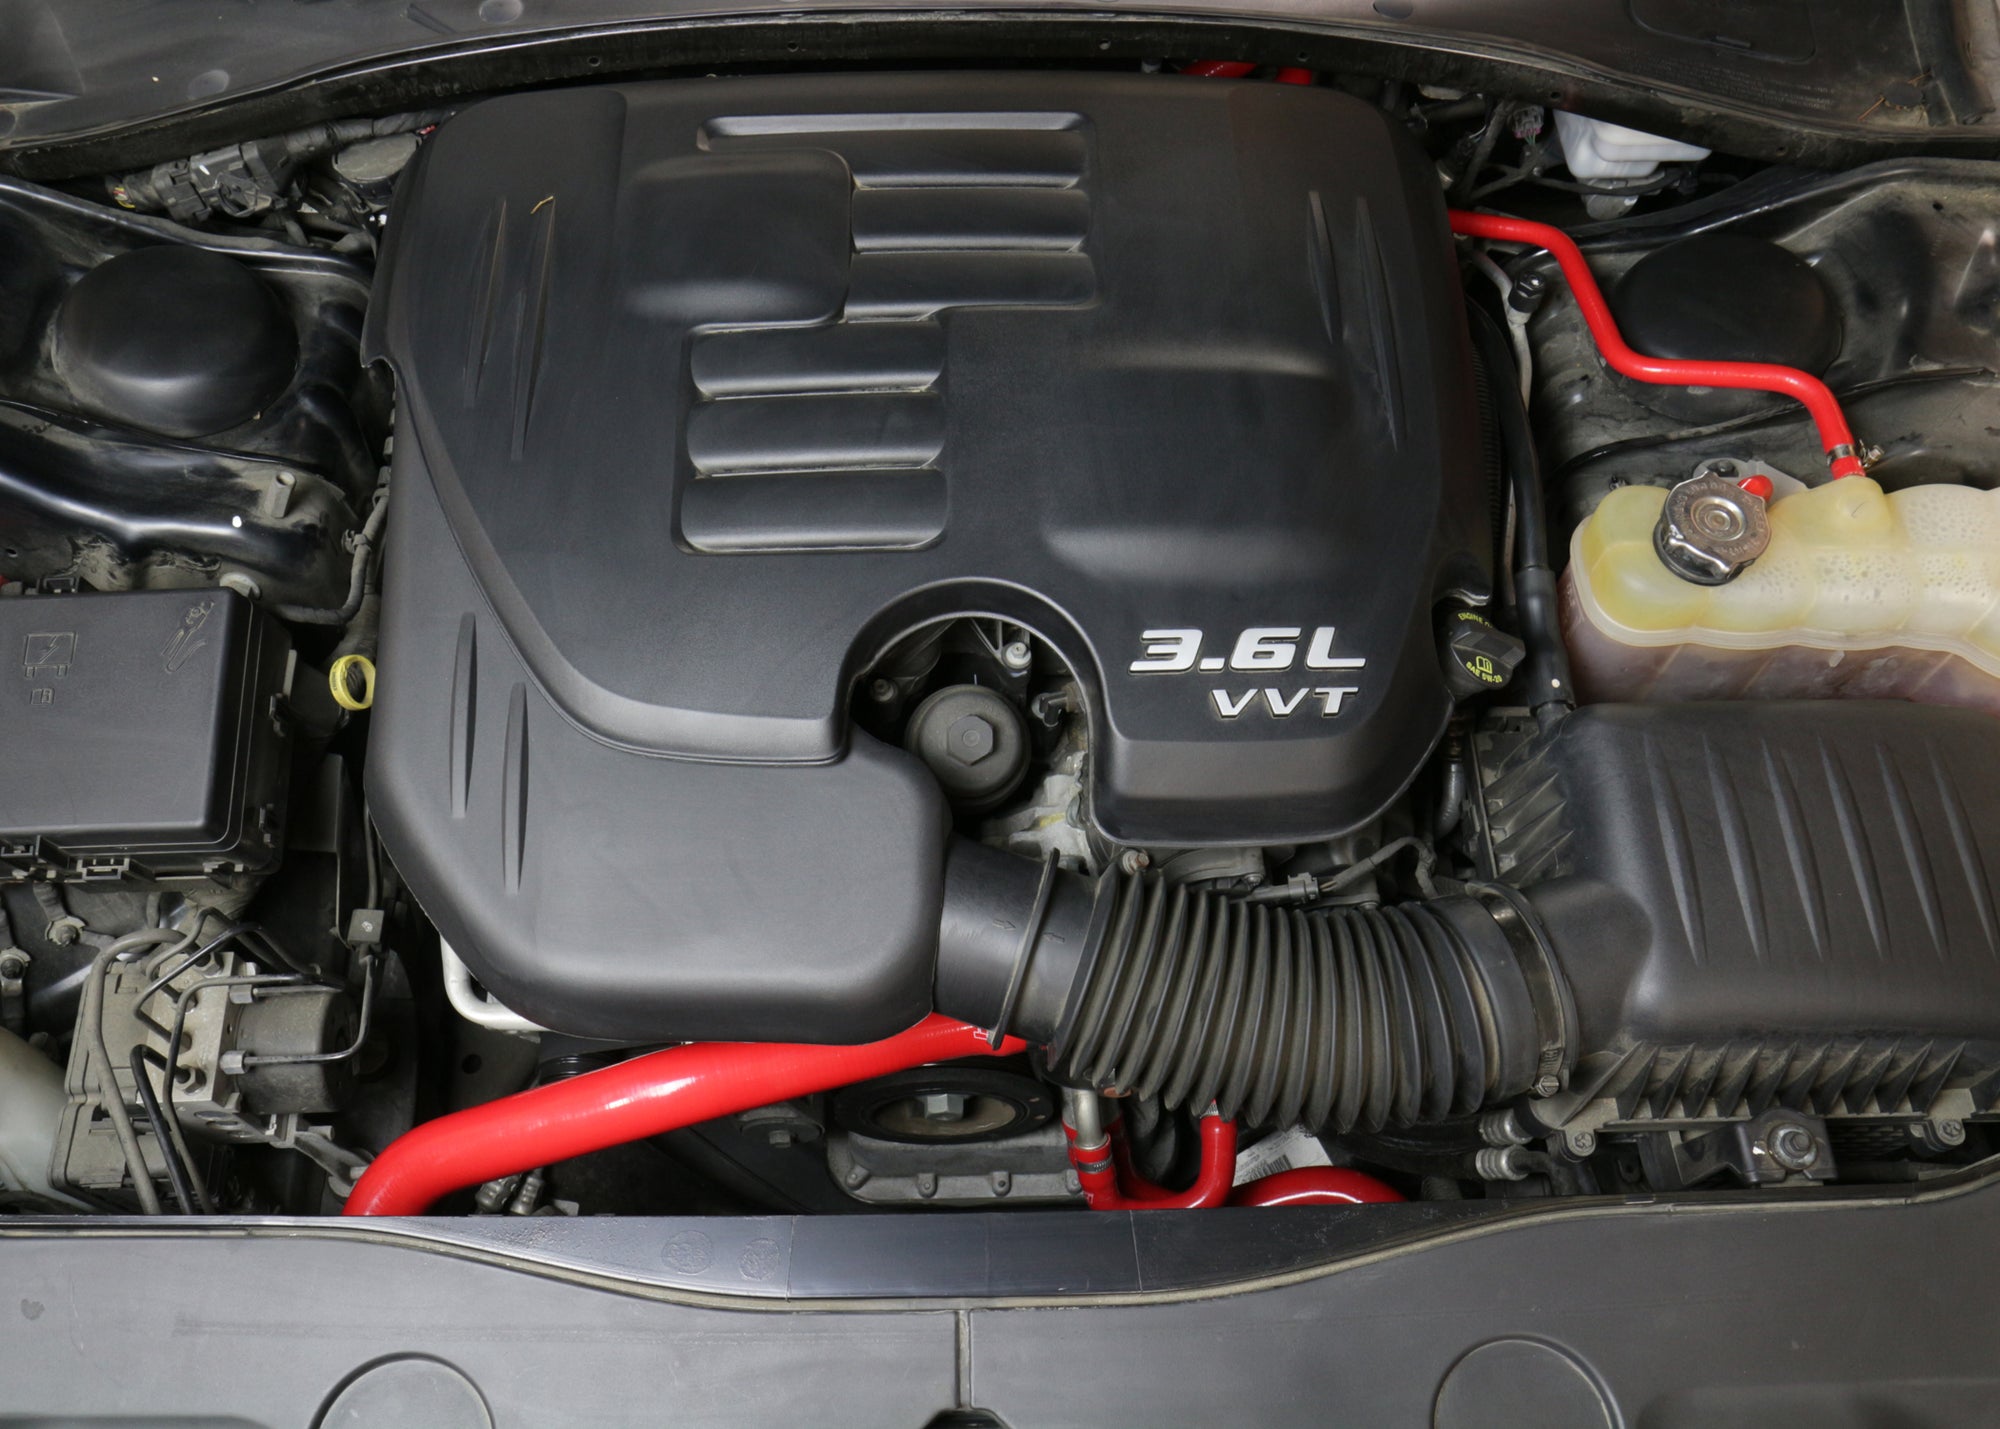 HPS Red Reinforced Silicone Radiator + Heater Hose Kit Coolant Dodge 11-17 Charger 3.6L V6 57-1583-RED Installed